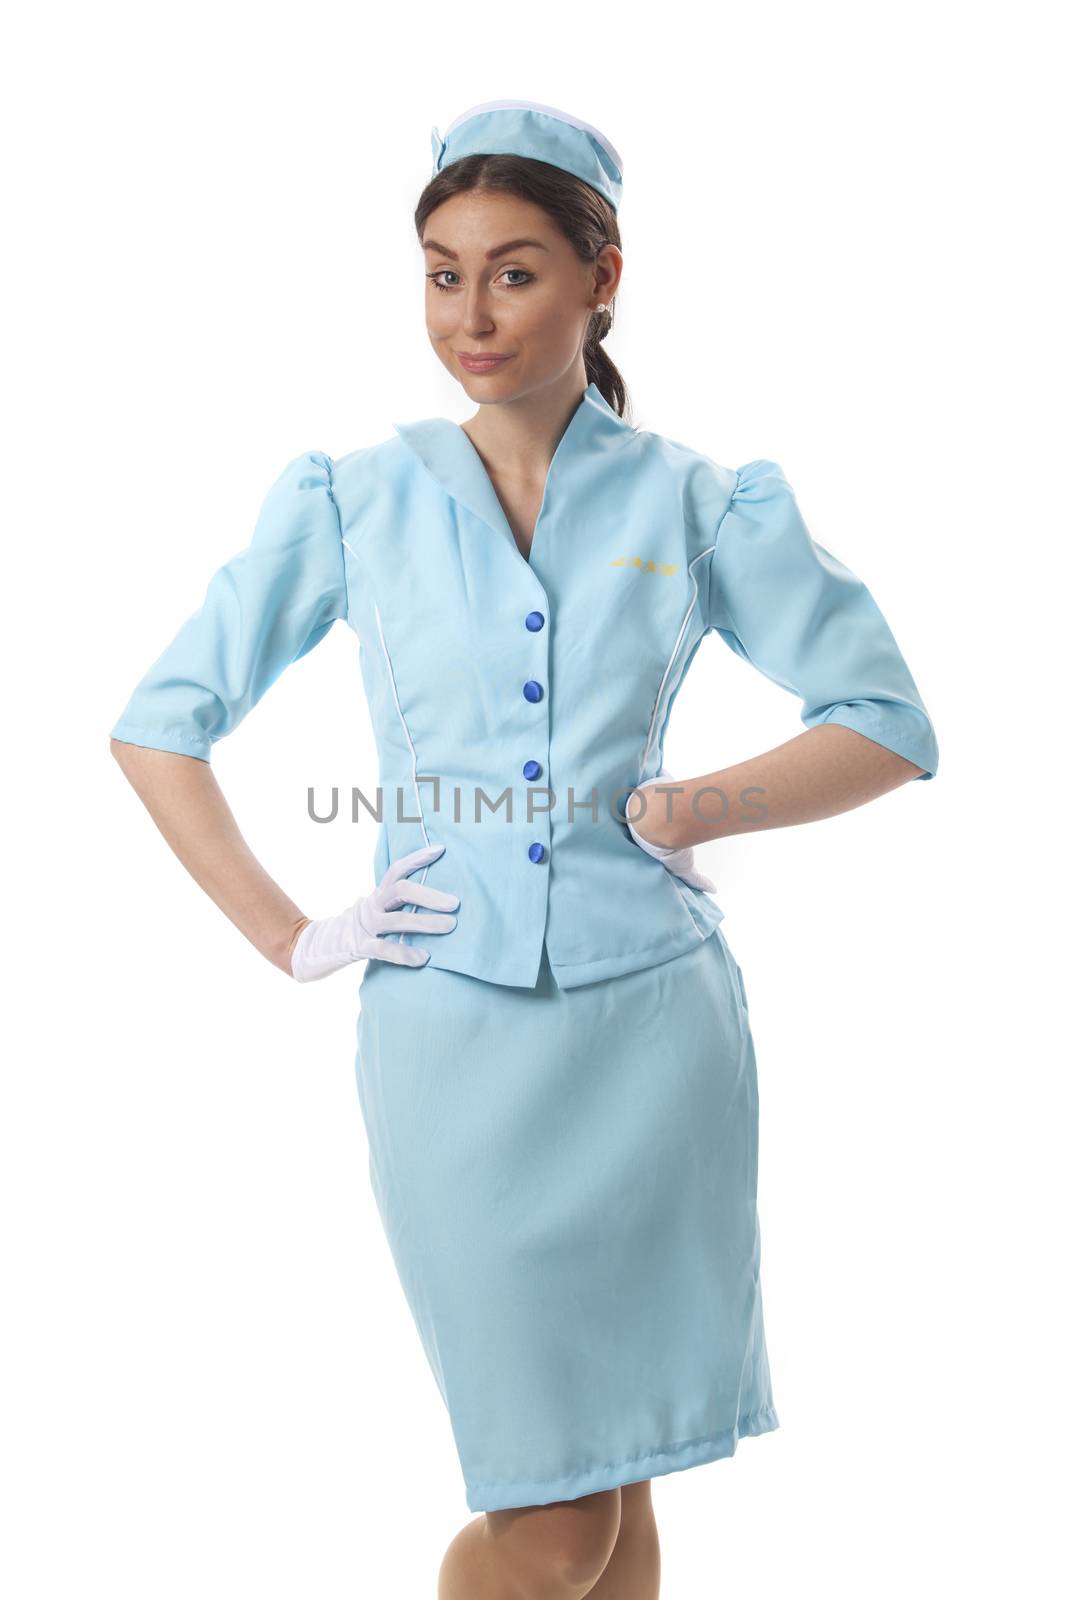 female flight attendant on white by bernjuer